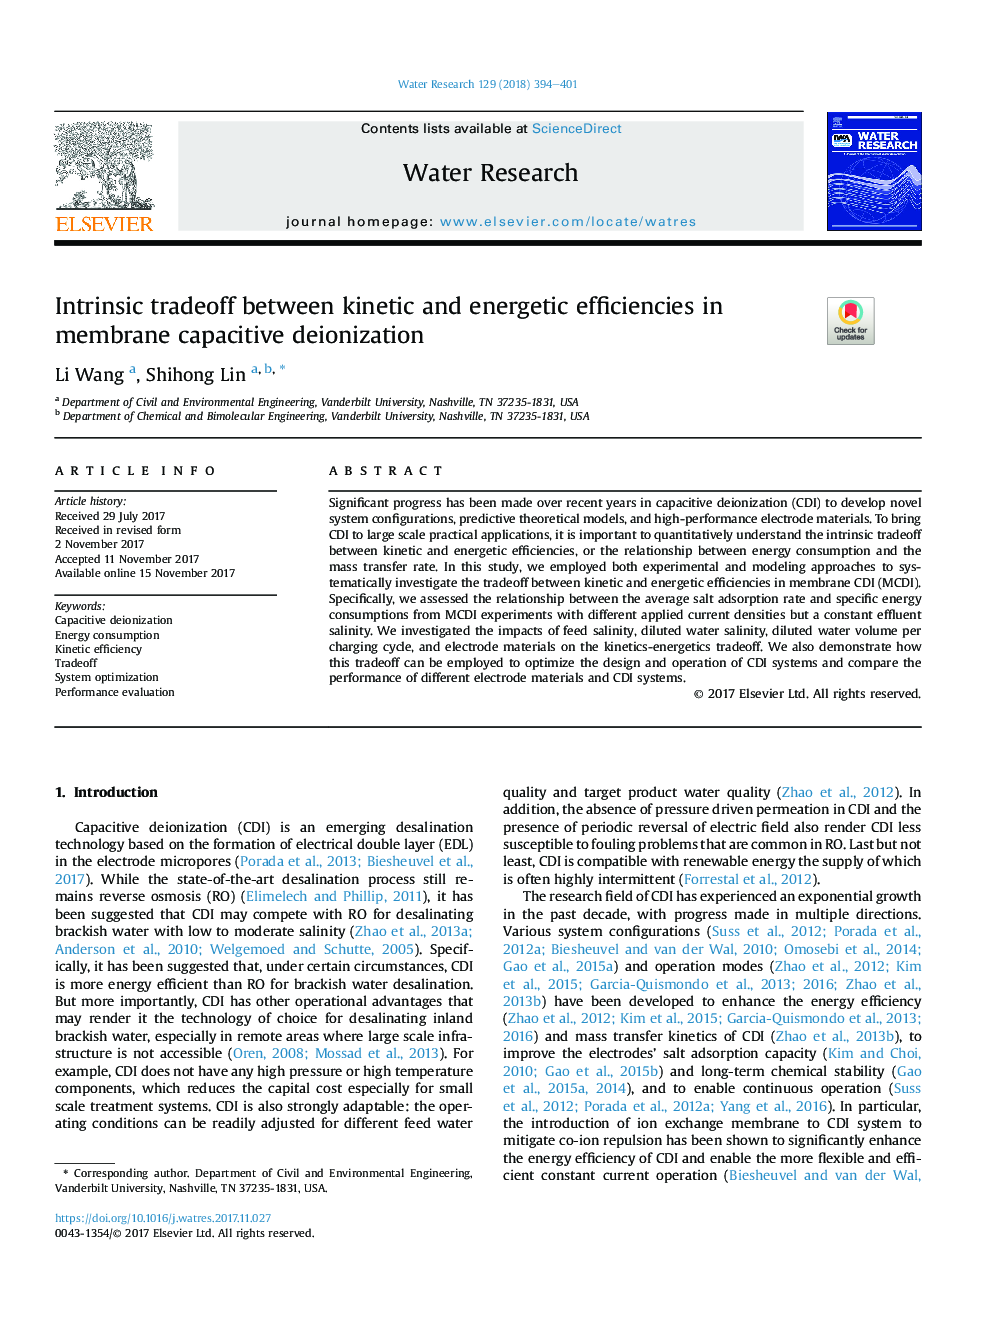 Intrinsic tradeoff between kinetic and energetic efficiencies in membrane capacitive deionization